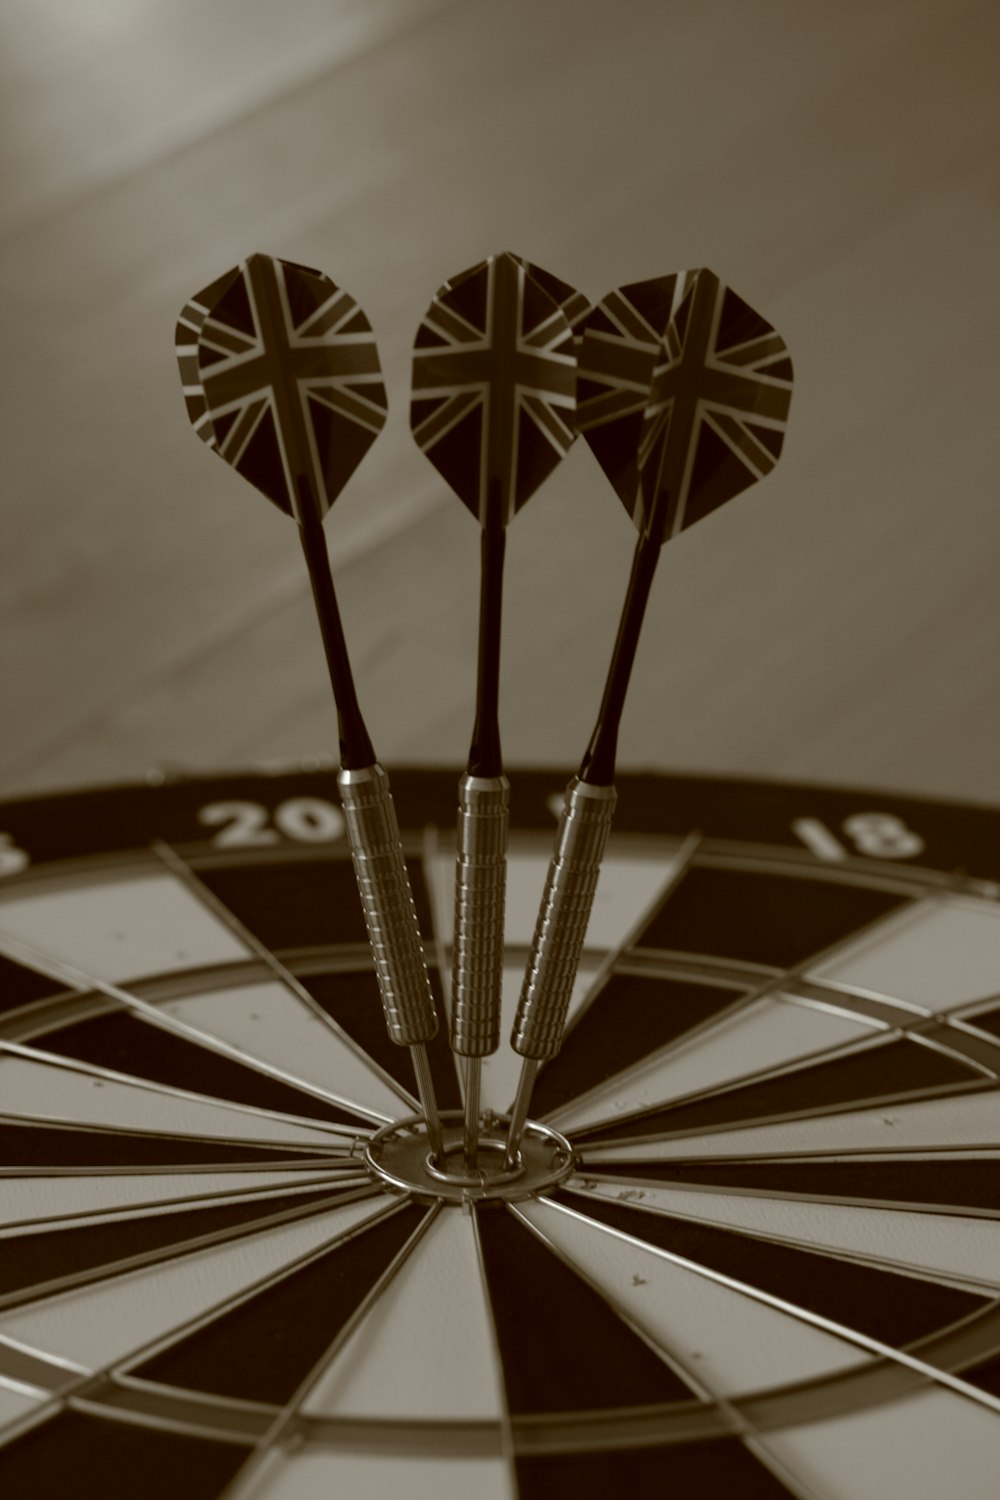 three darts in the center of a dart